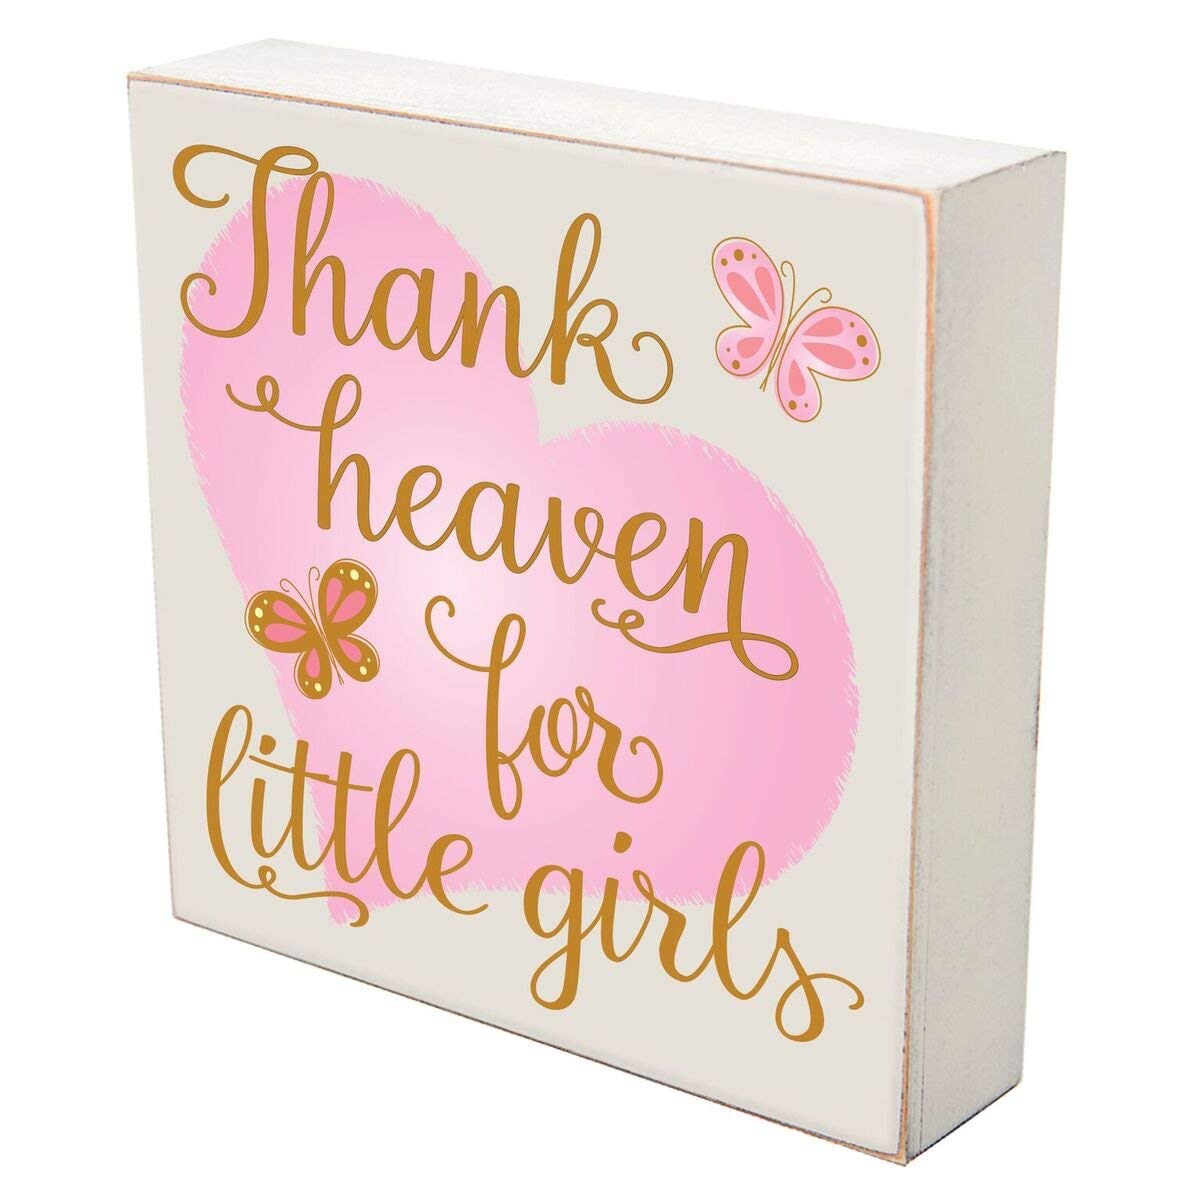 Digitally Printed Shadow Box Wall Decor - Thank Heaven For Little Girls - LifeSong Milestones